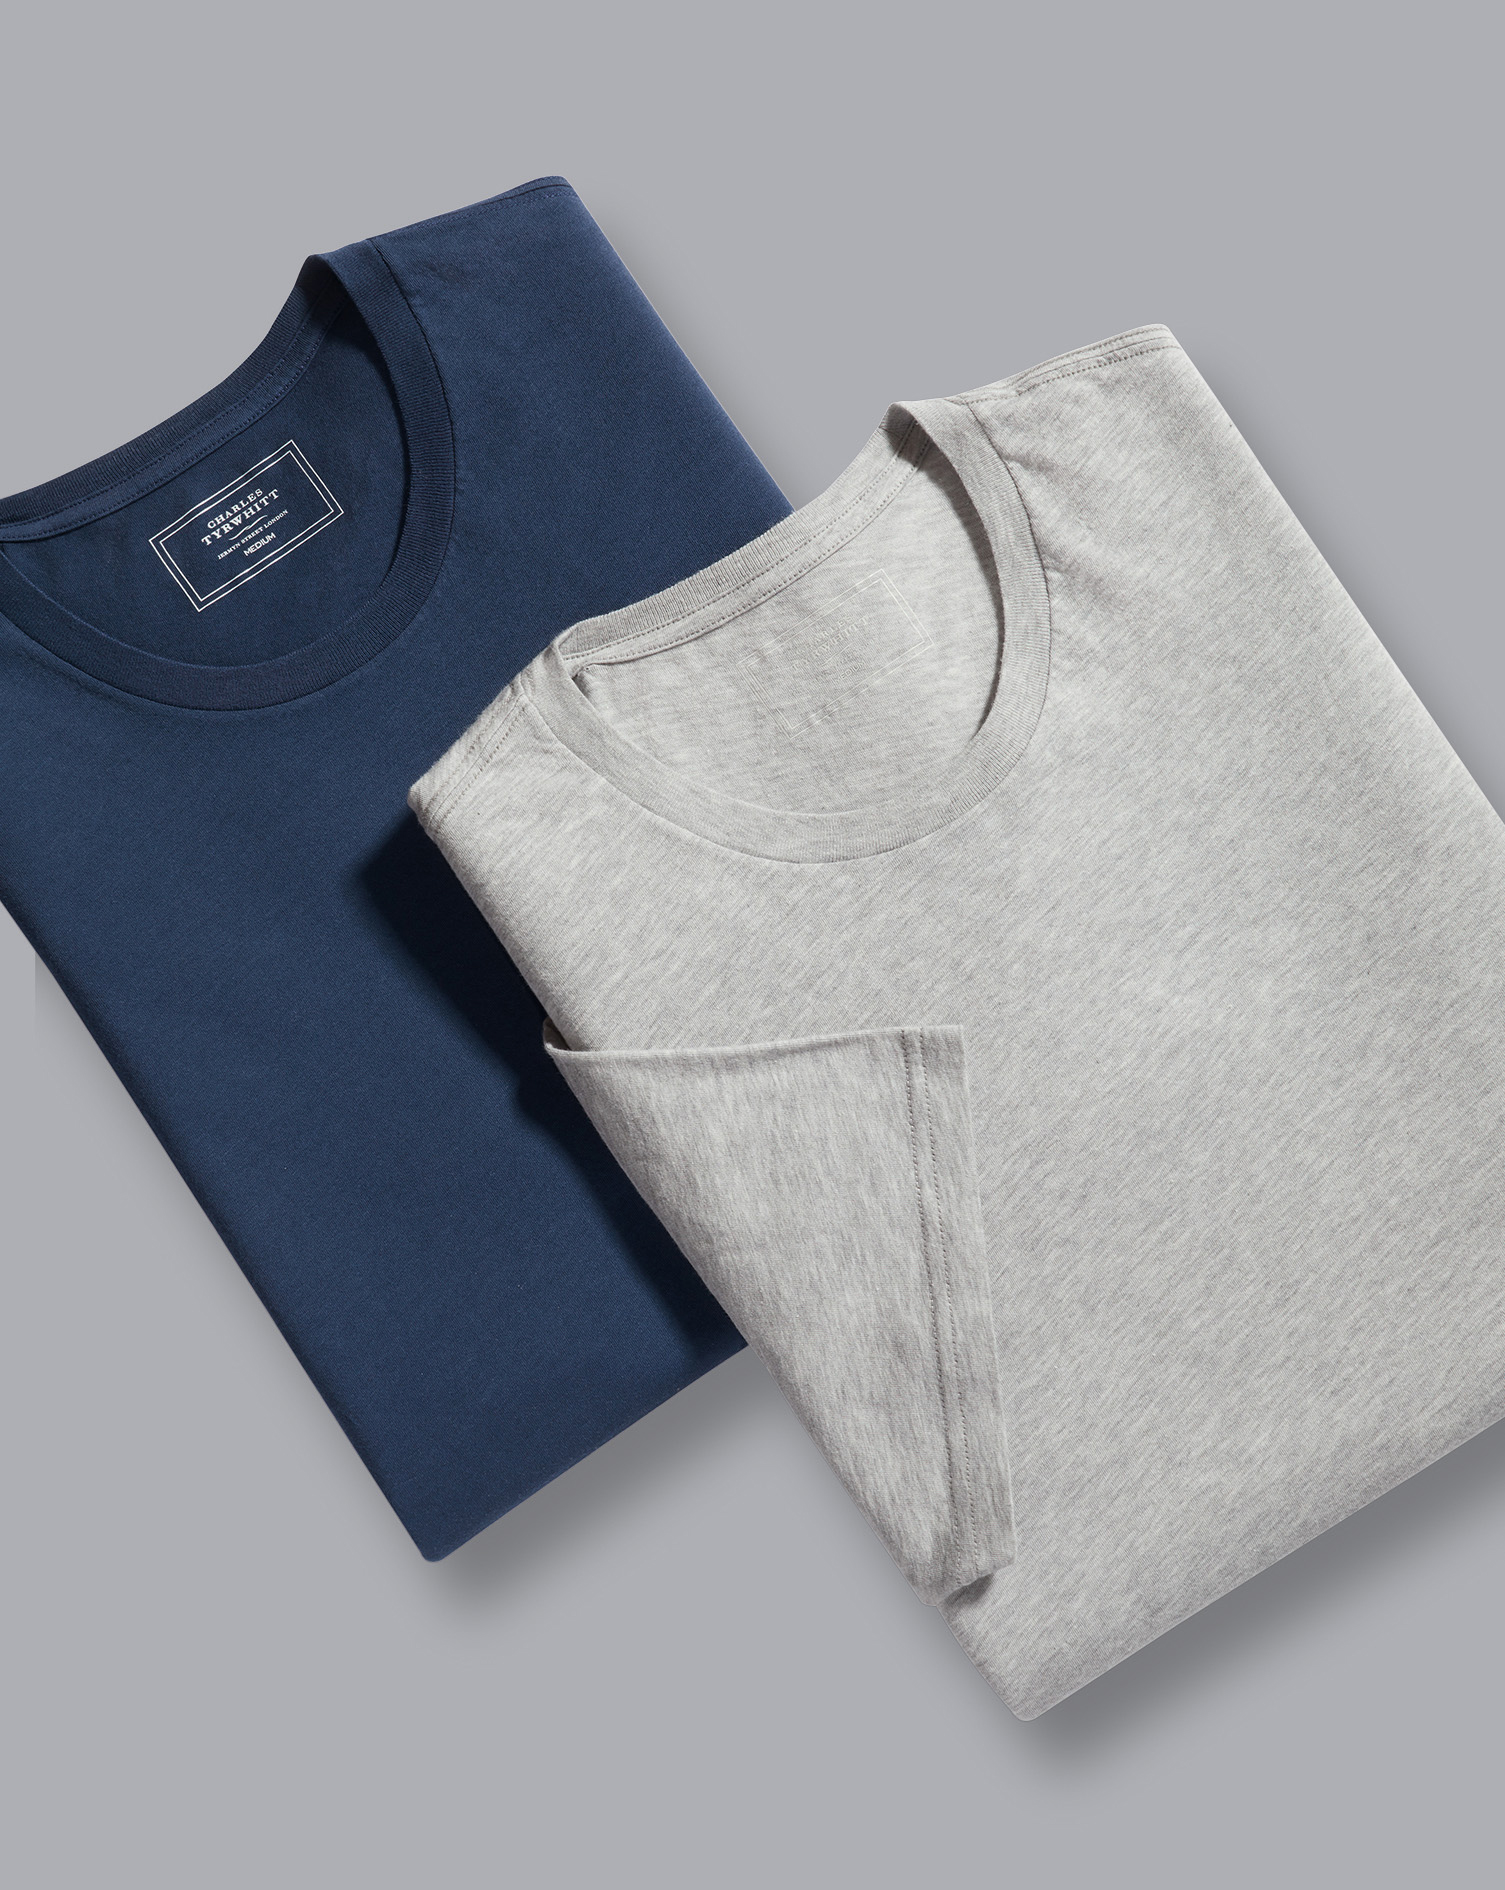 Men's Charles Tyrwhitt 2 Pack Crew Neck T-Shirts - Indigo Blue and Grey Size Large Cotton
